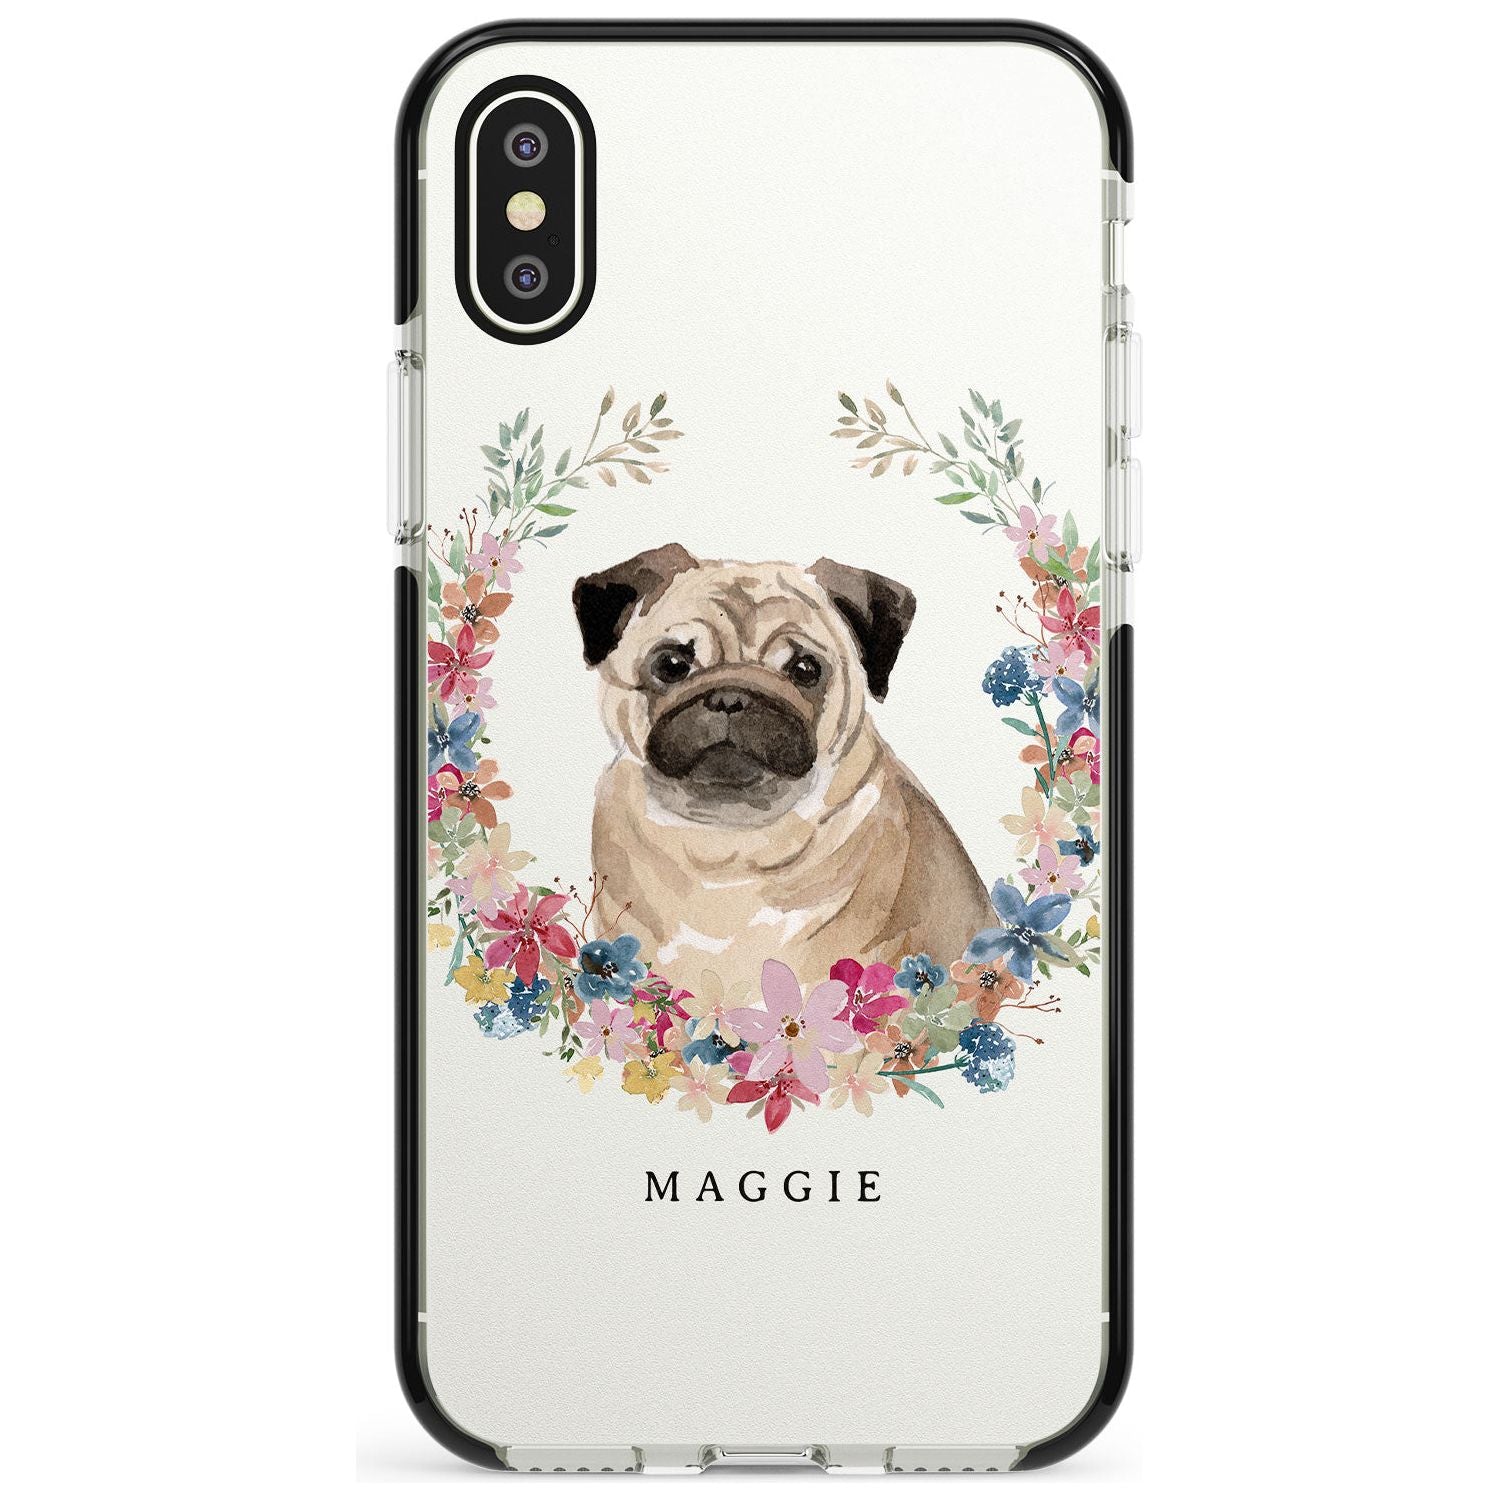 Pug - Watercolour Dog Portrait Black Impact Phone Case for iPhone X XS Max XR